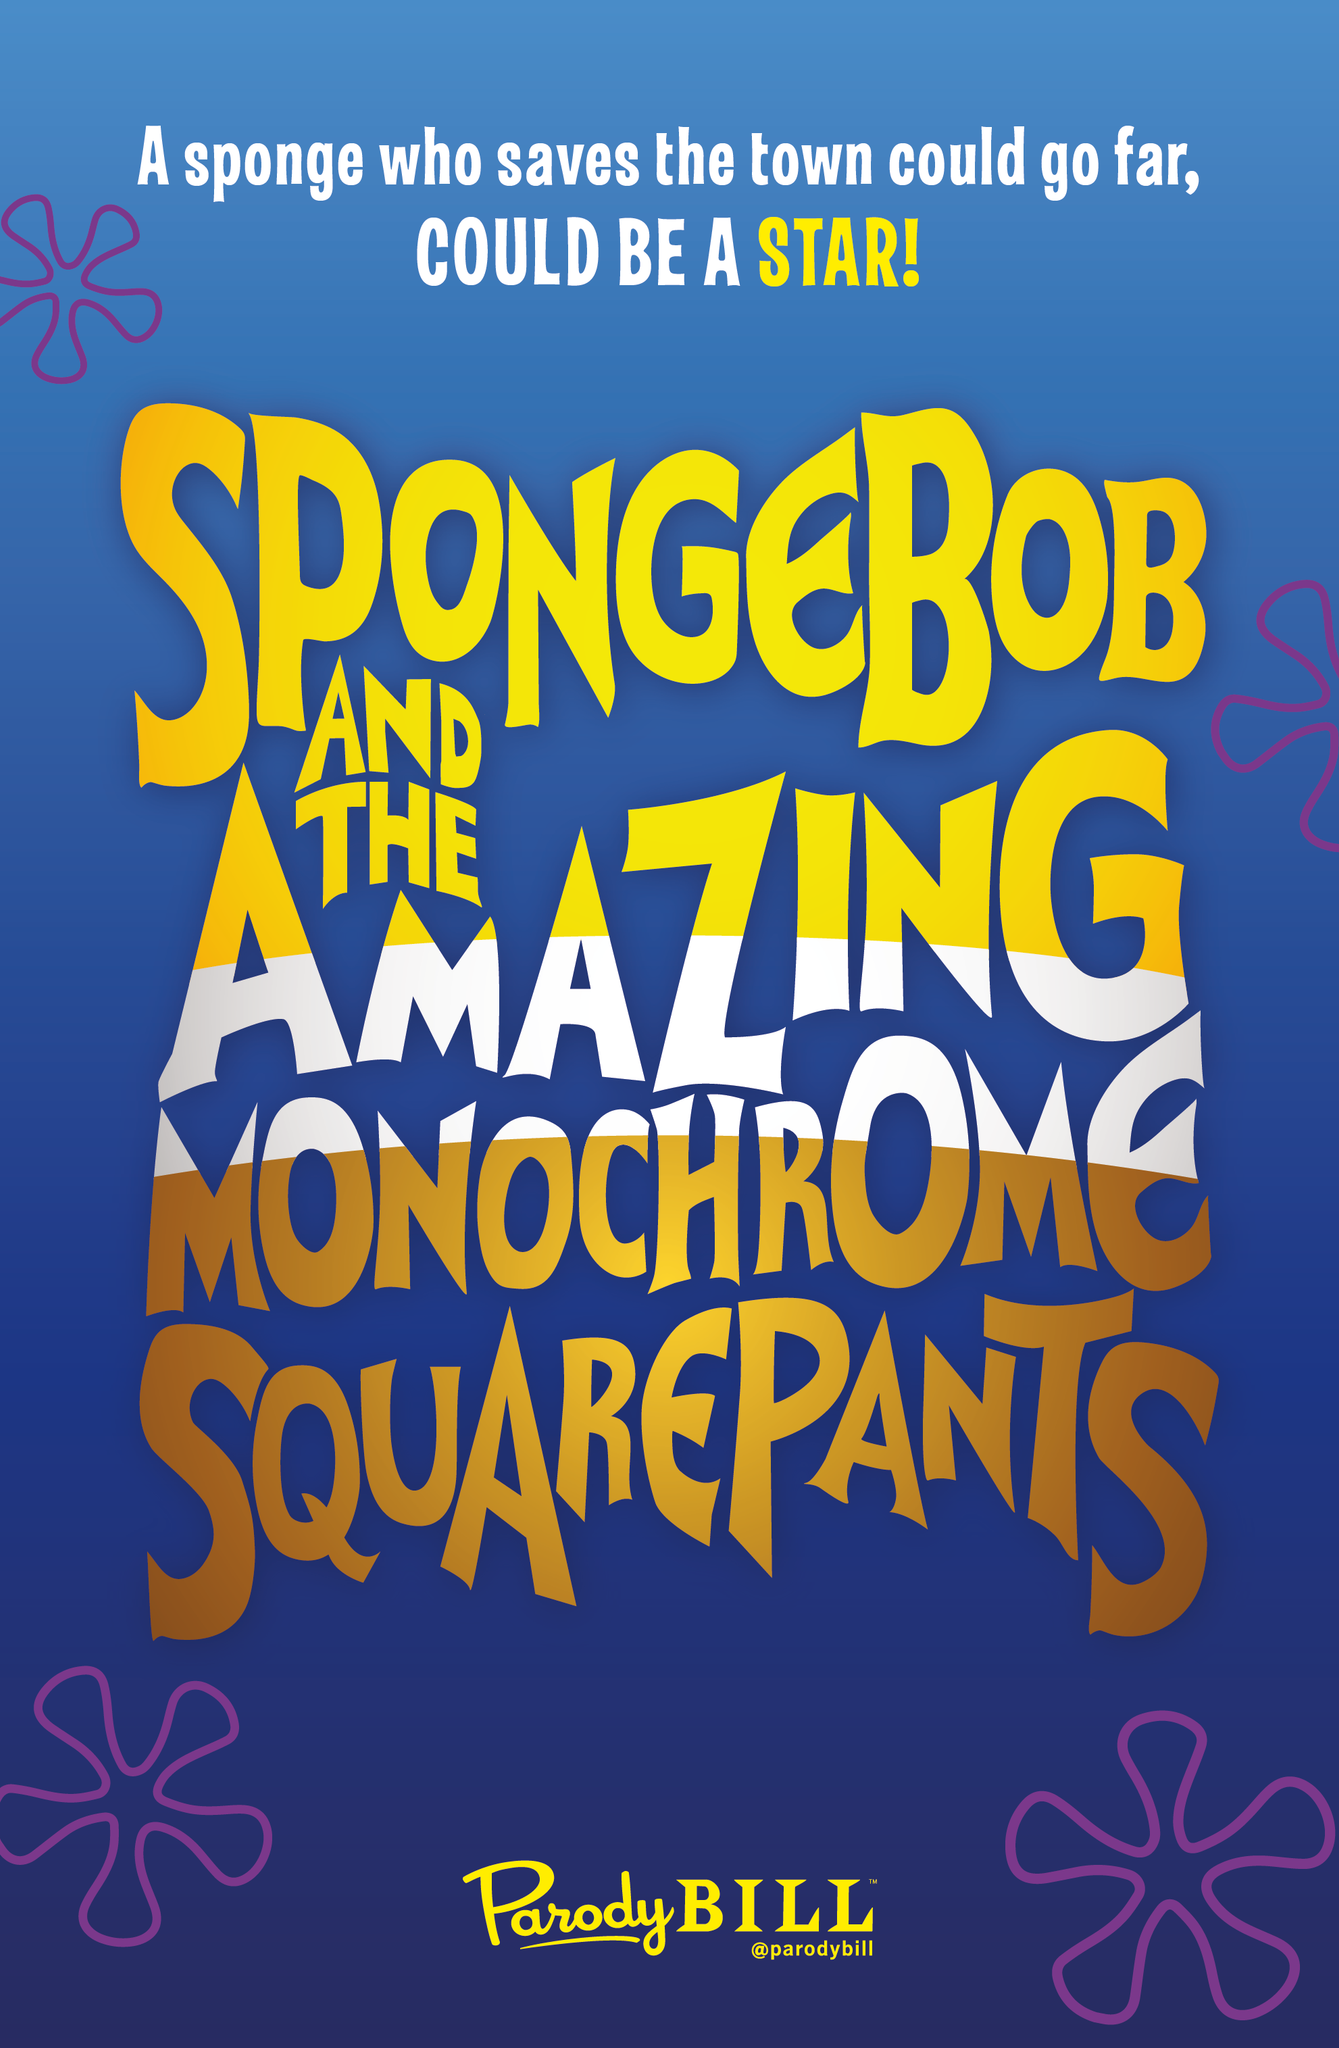 Spongebob and the Amazing Monochrome Squarepants - Print